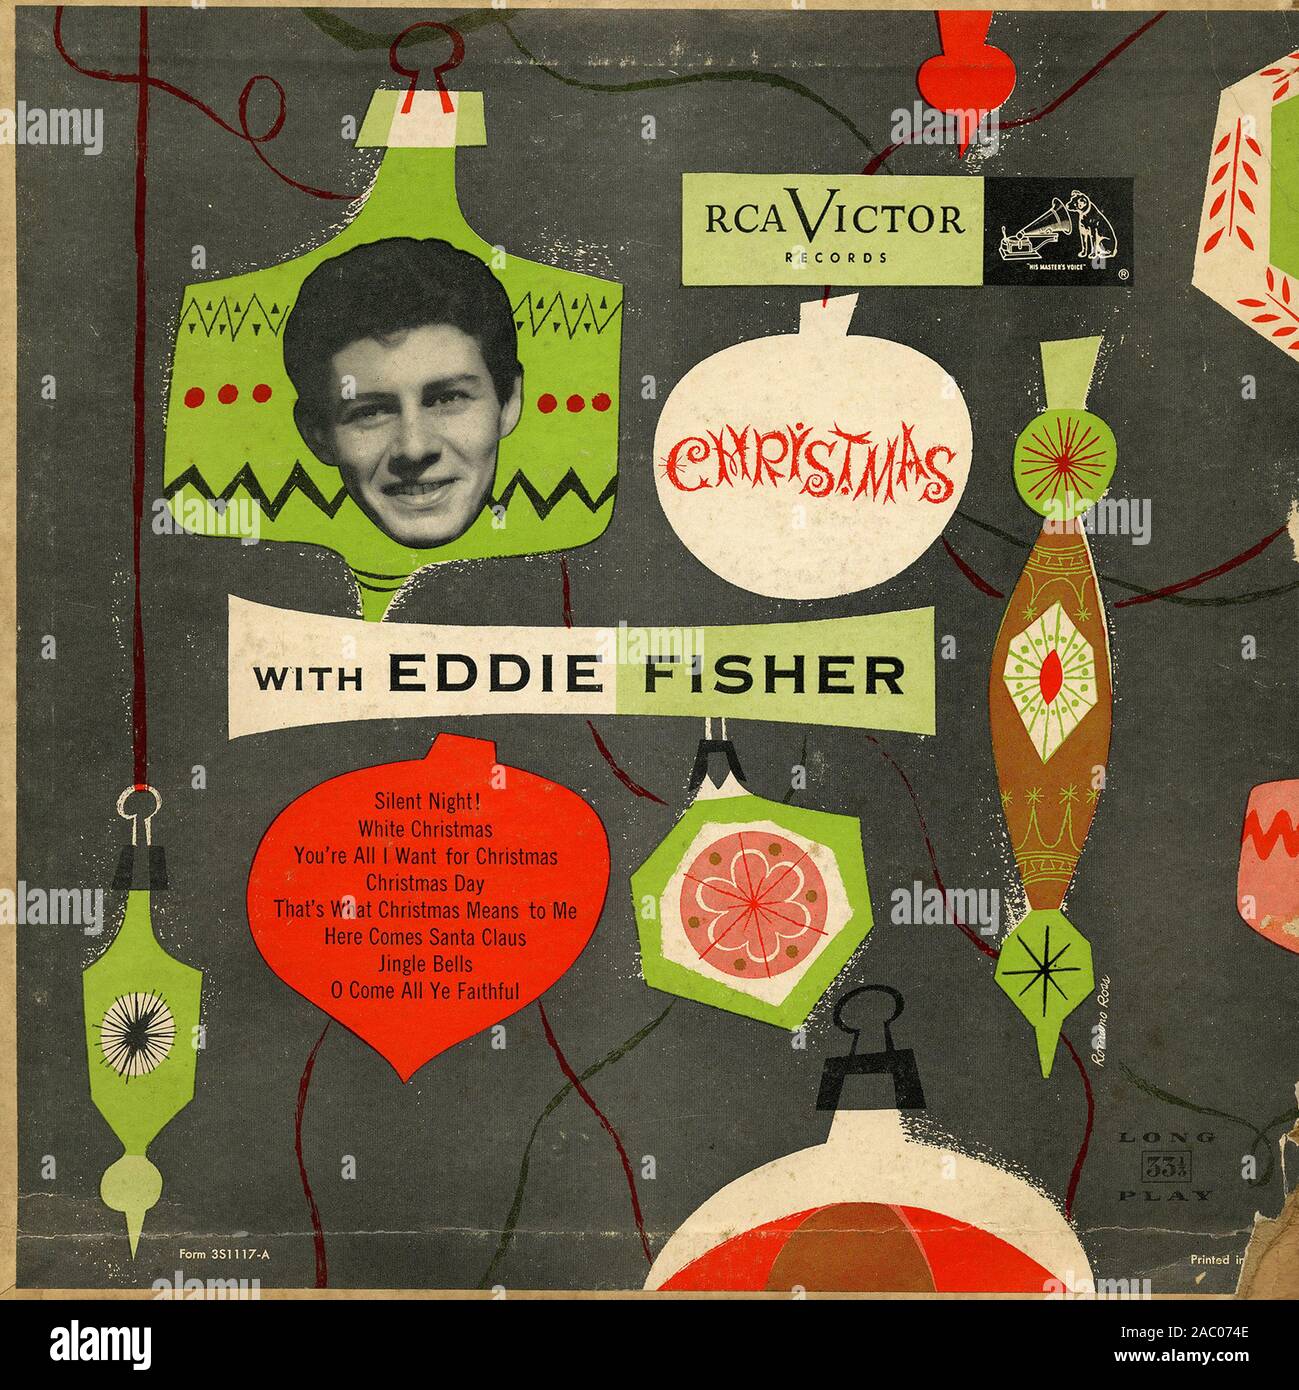 Christmas With Eddie Fisher   - Vintage vinyl album cover Stock Photo